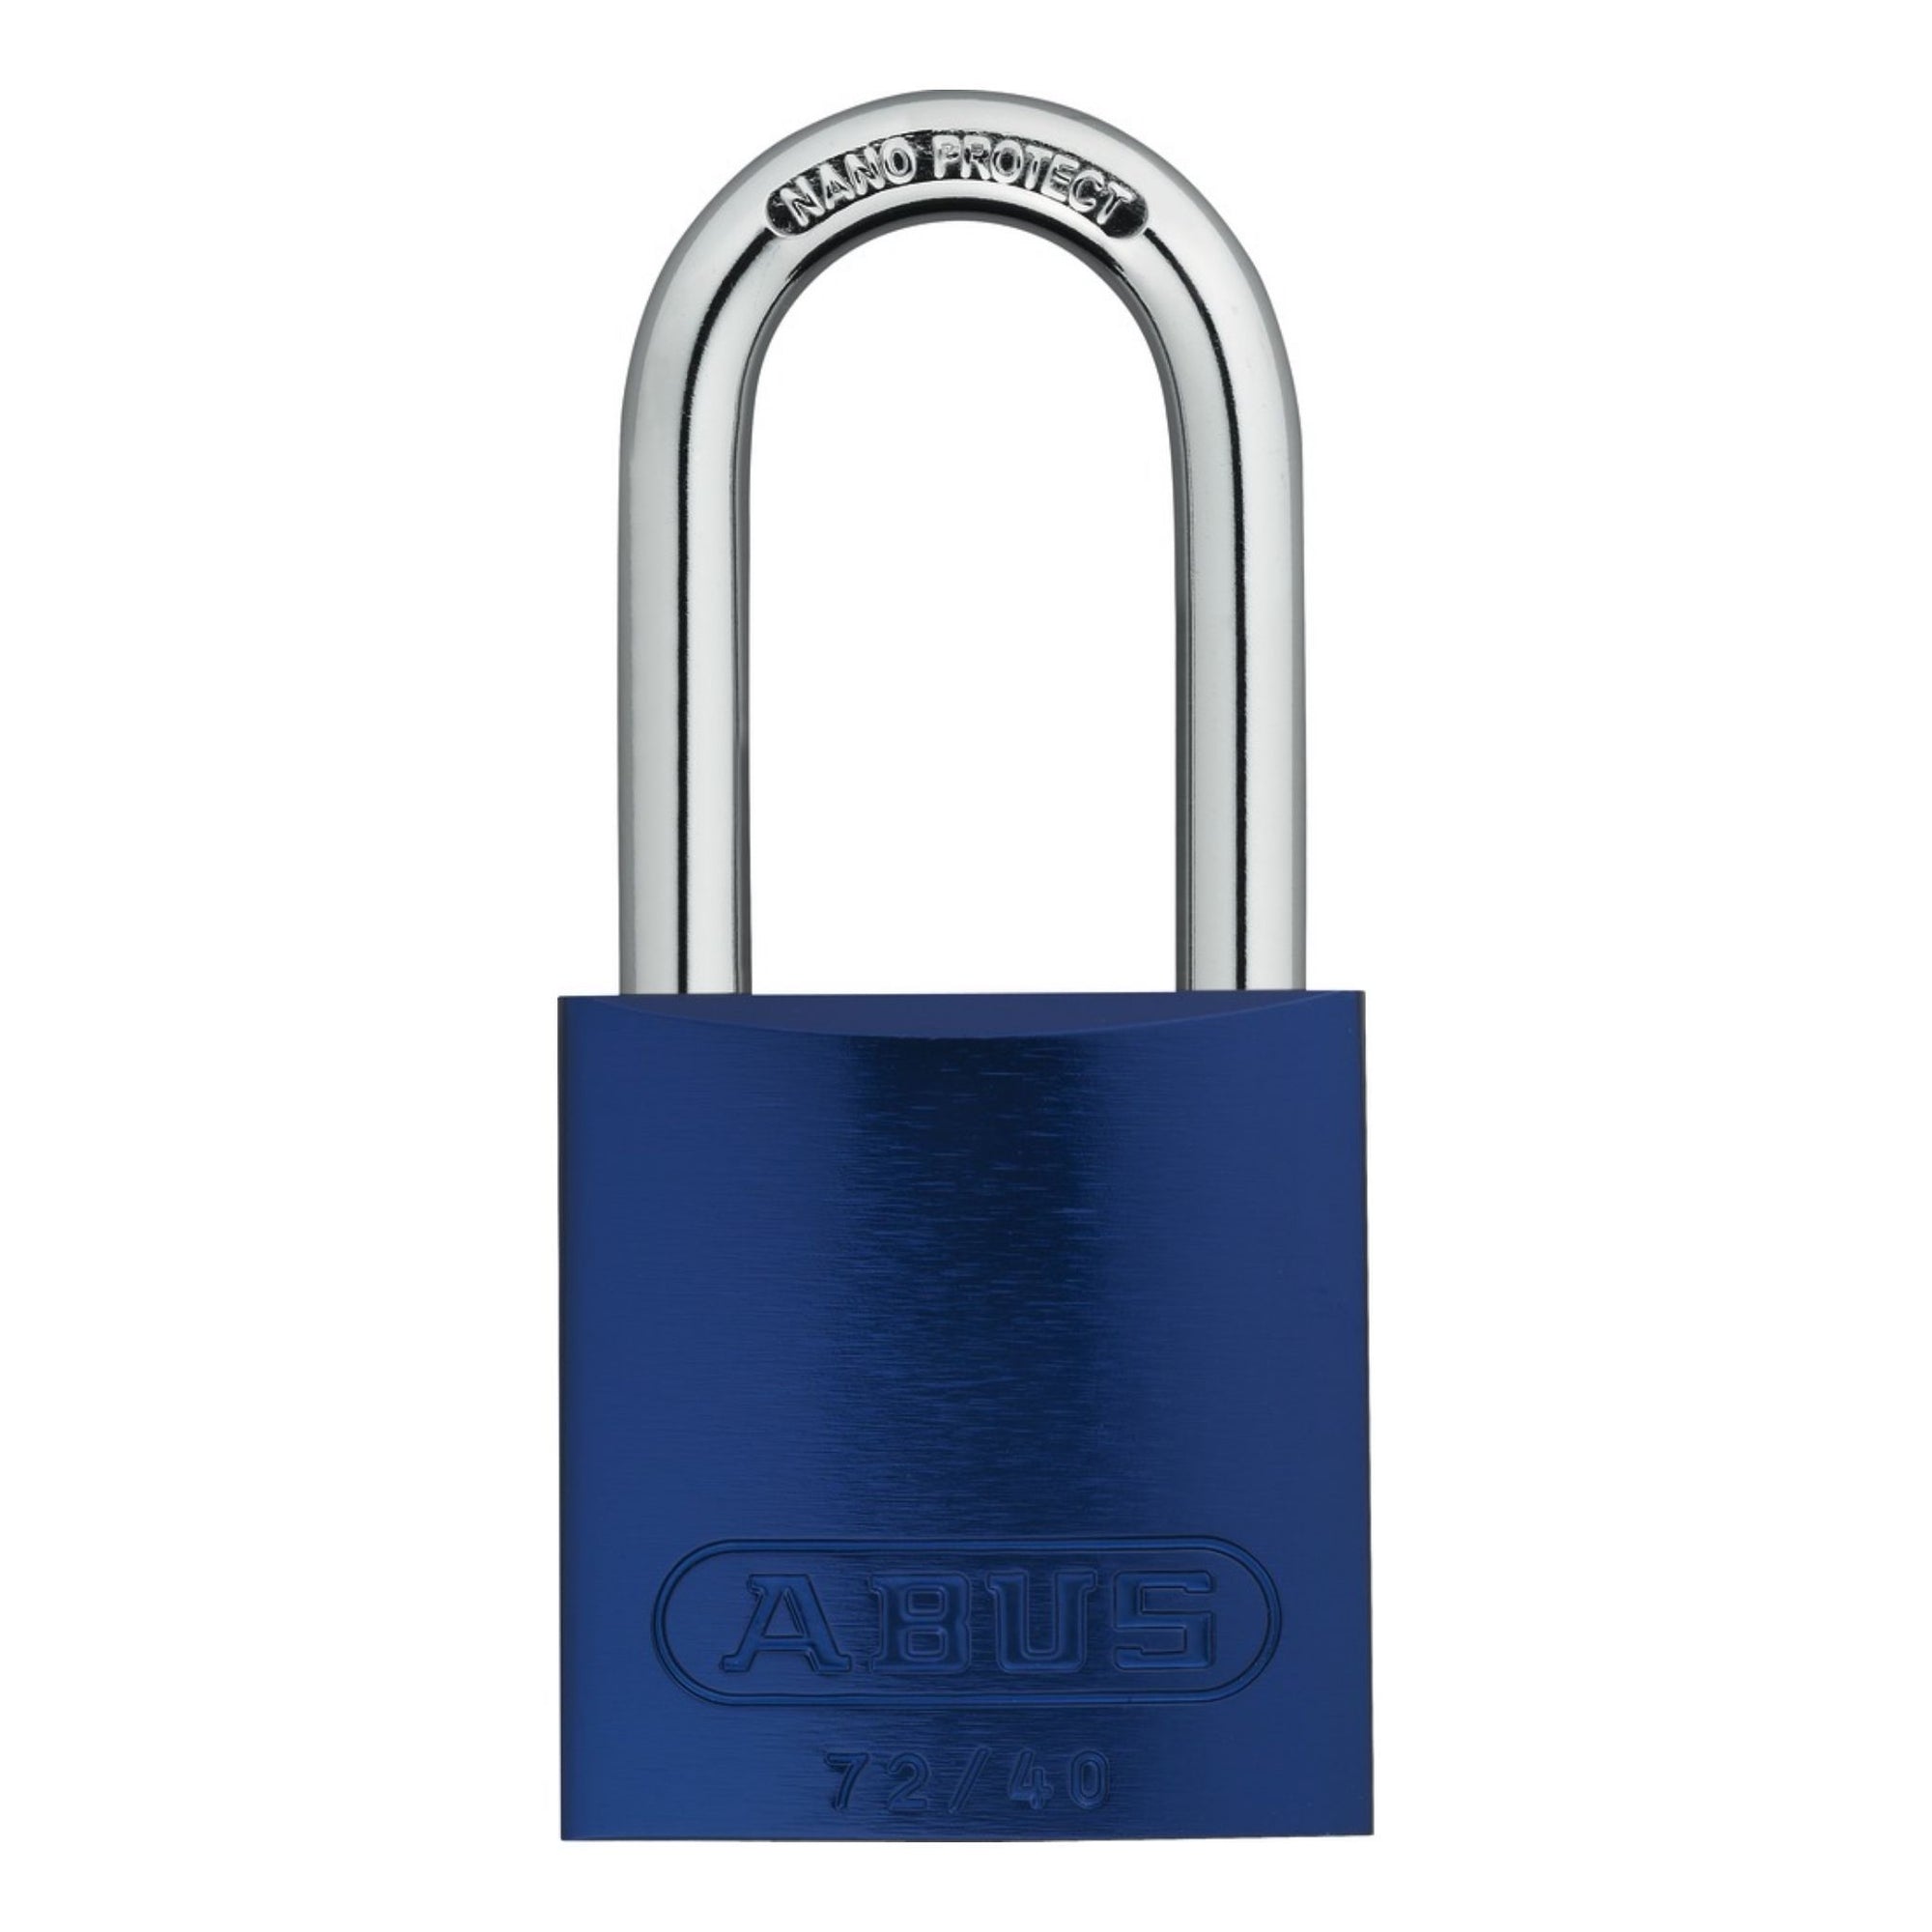 Abus 72/40HB40 KA TT00036 Blue Titalium Safety Padlock with 1-1/2" Shackle, Keyed Alike to Match Existing Key Number KATT00036 - The Lock Source